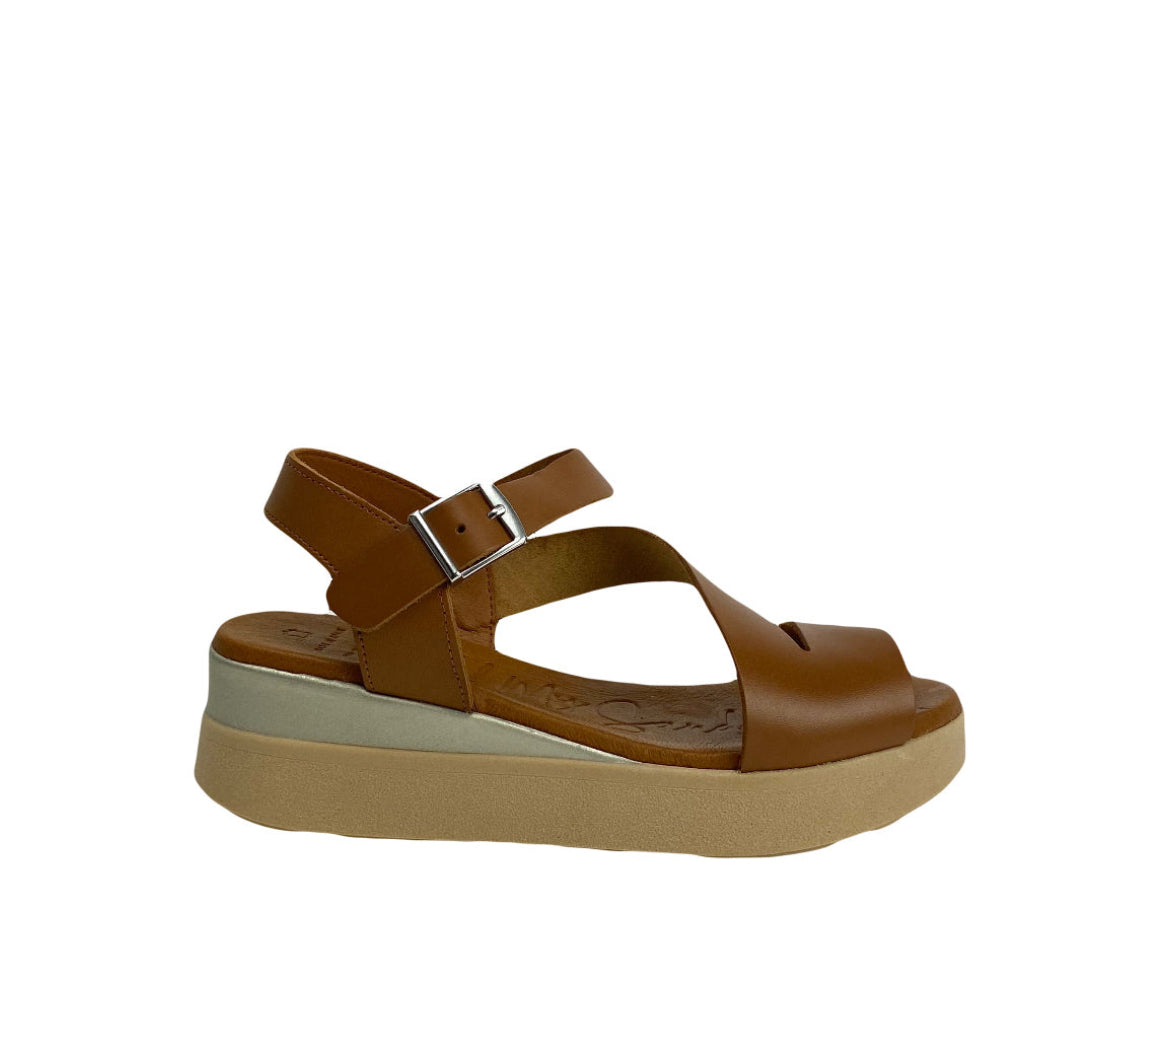 Oh My Sandals - 5417 Tan Strap Sandal